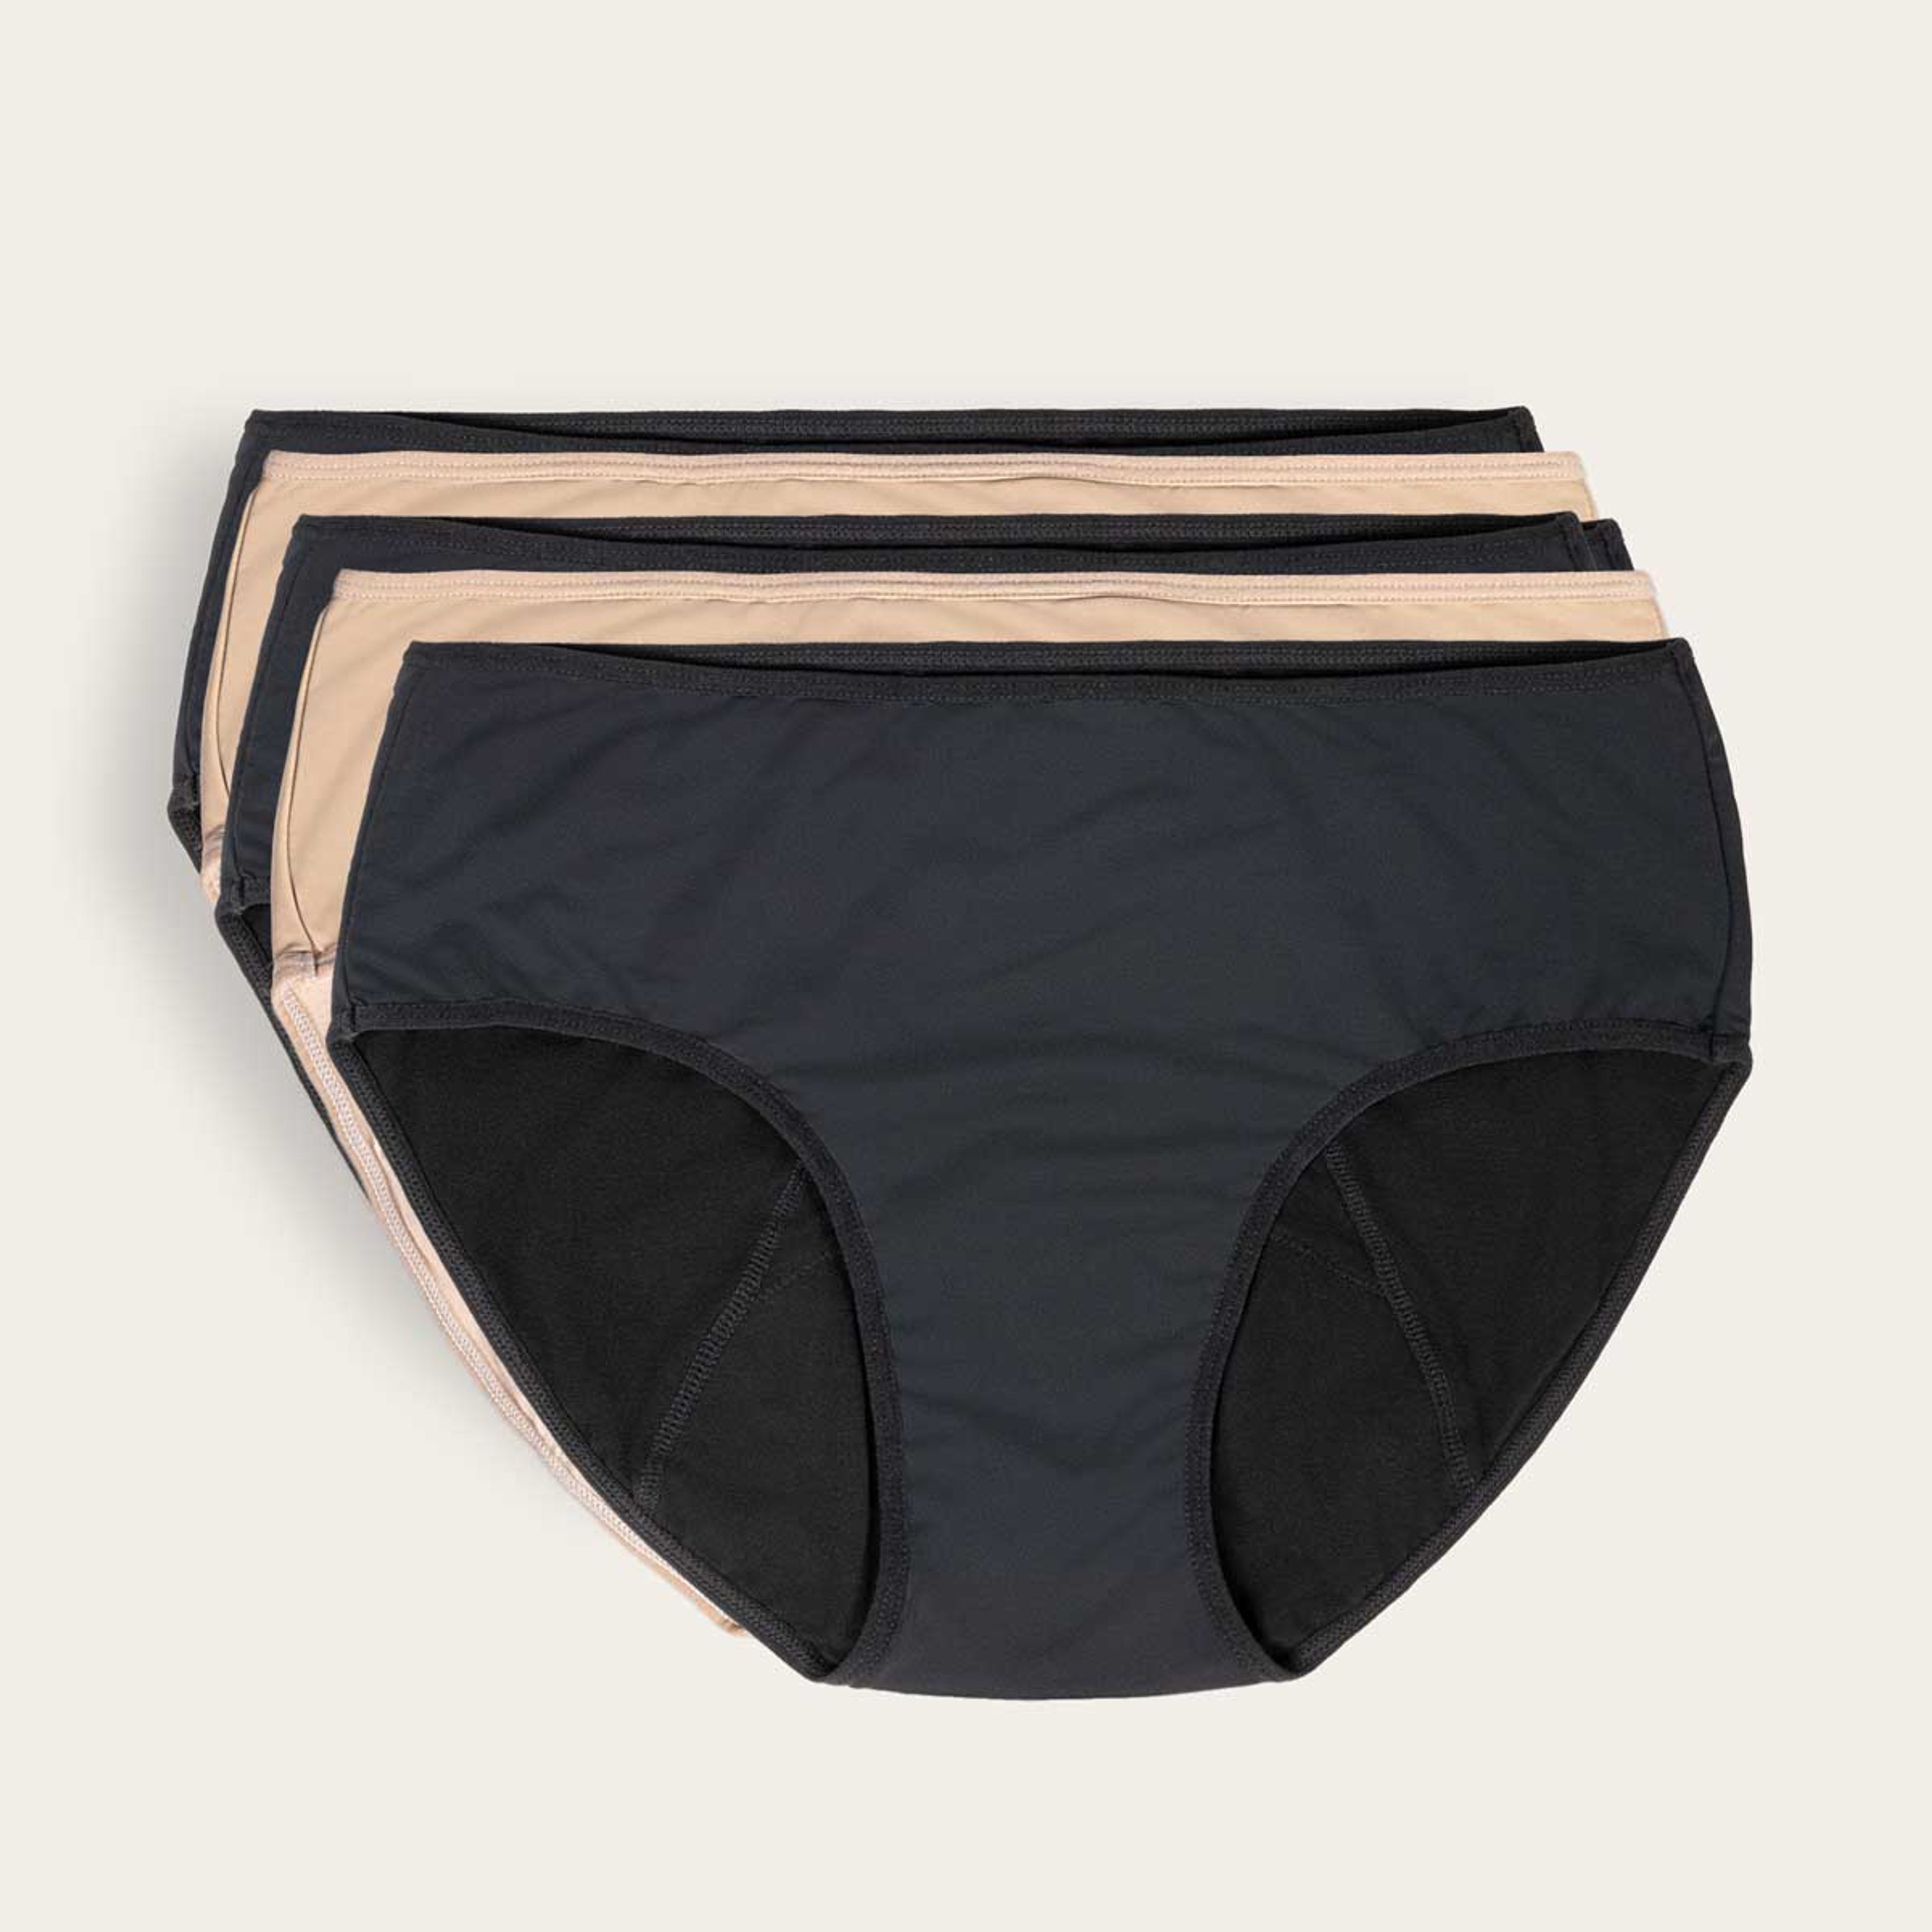  Nyssa VieWear Period Comfort Underwear with Pocketed